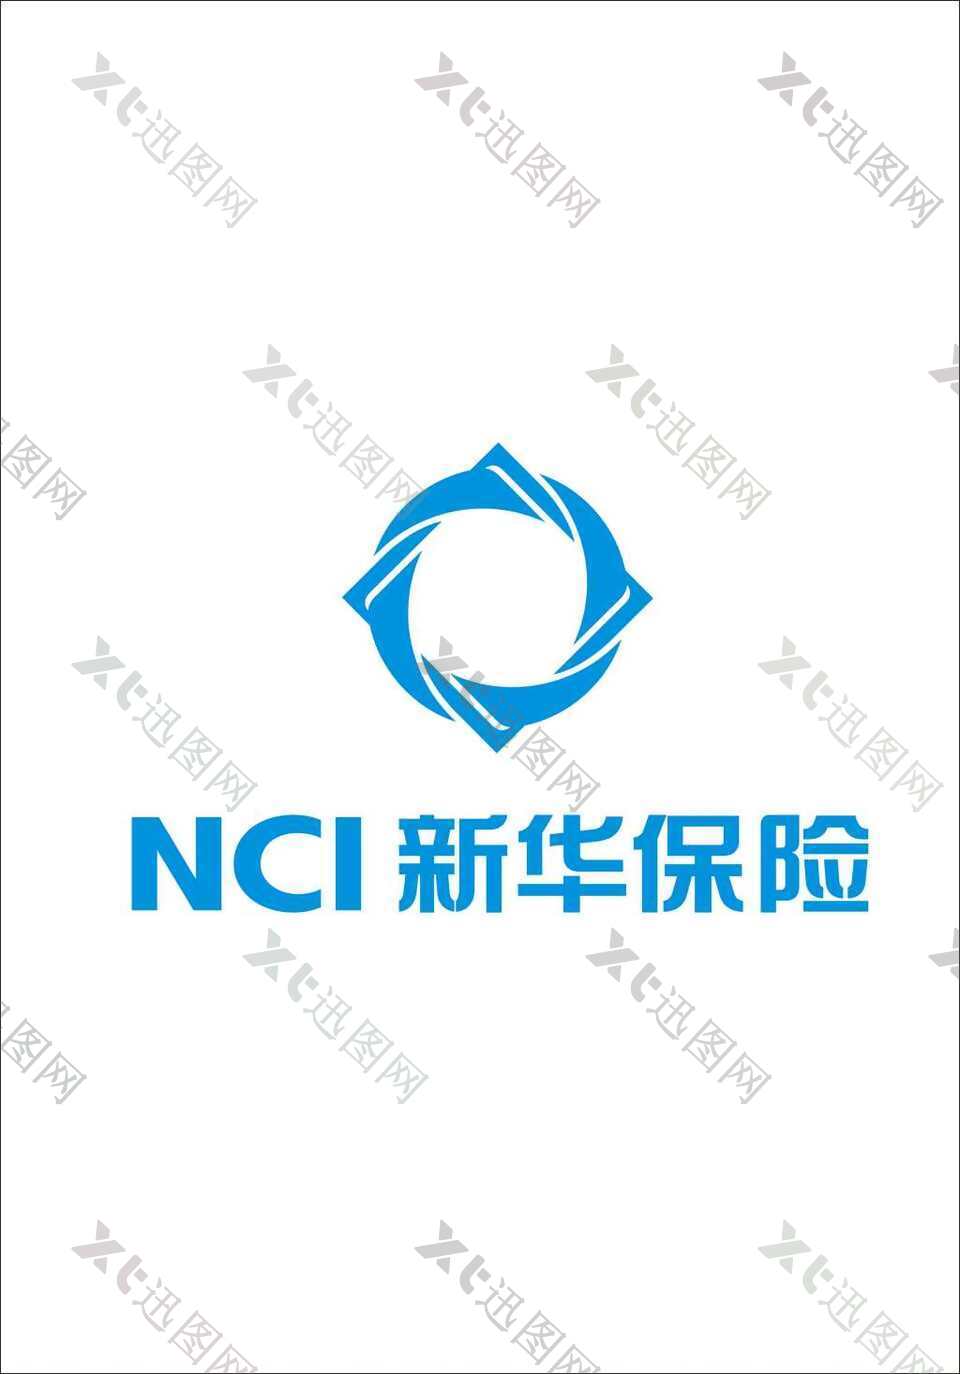 NCI新华保险标志